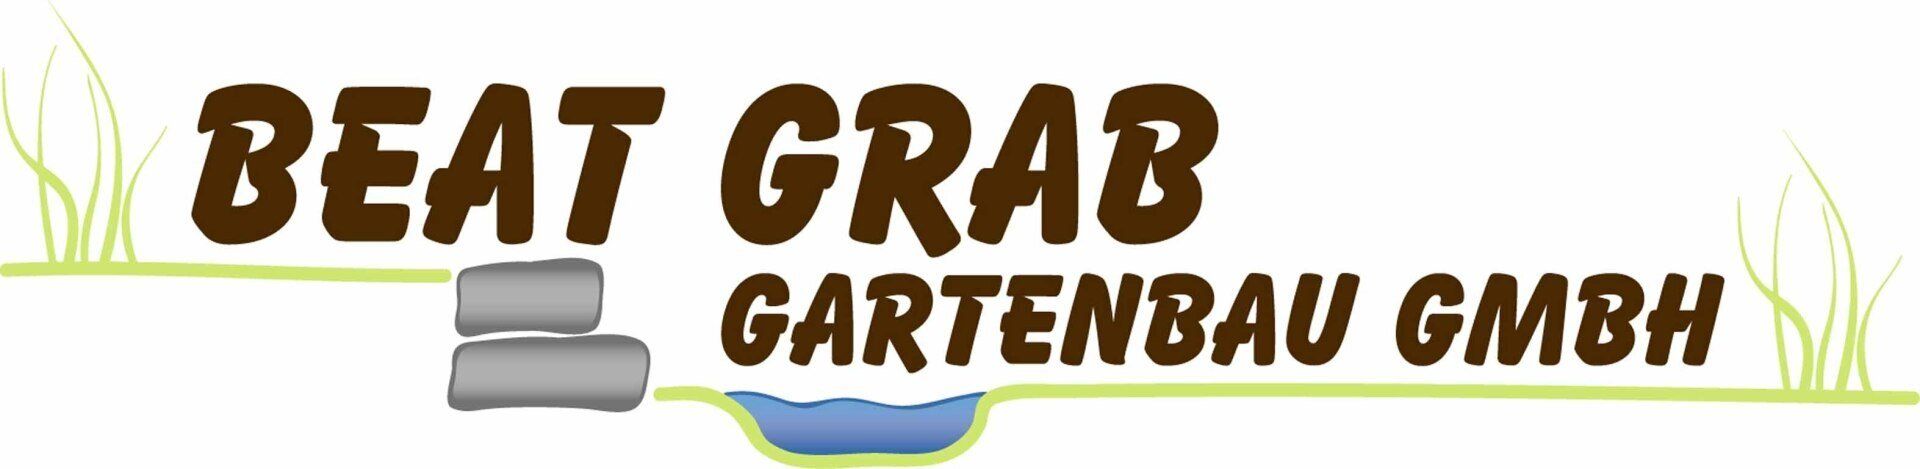 Logo | Beat Grab Gartenbau GmbH | Unterägeri im Kanton Zug